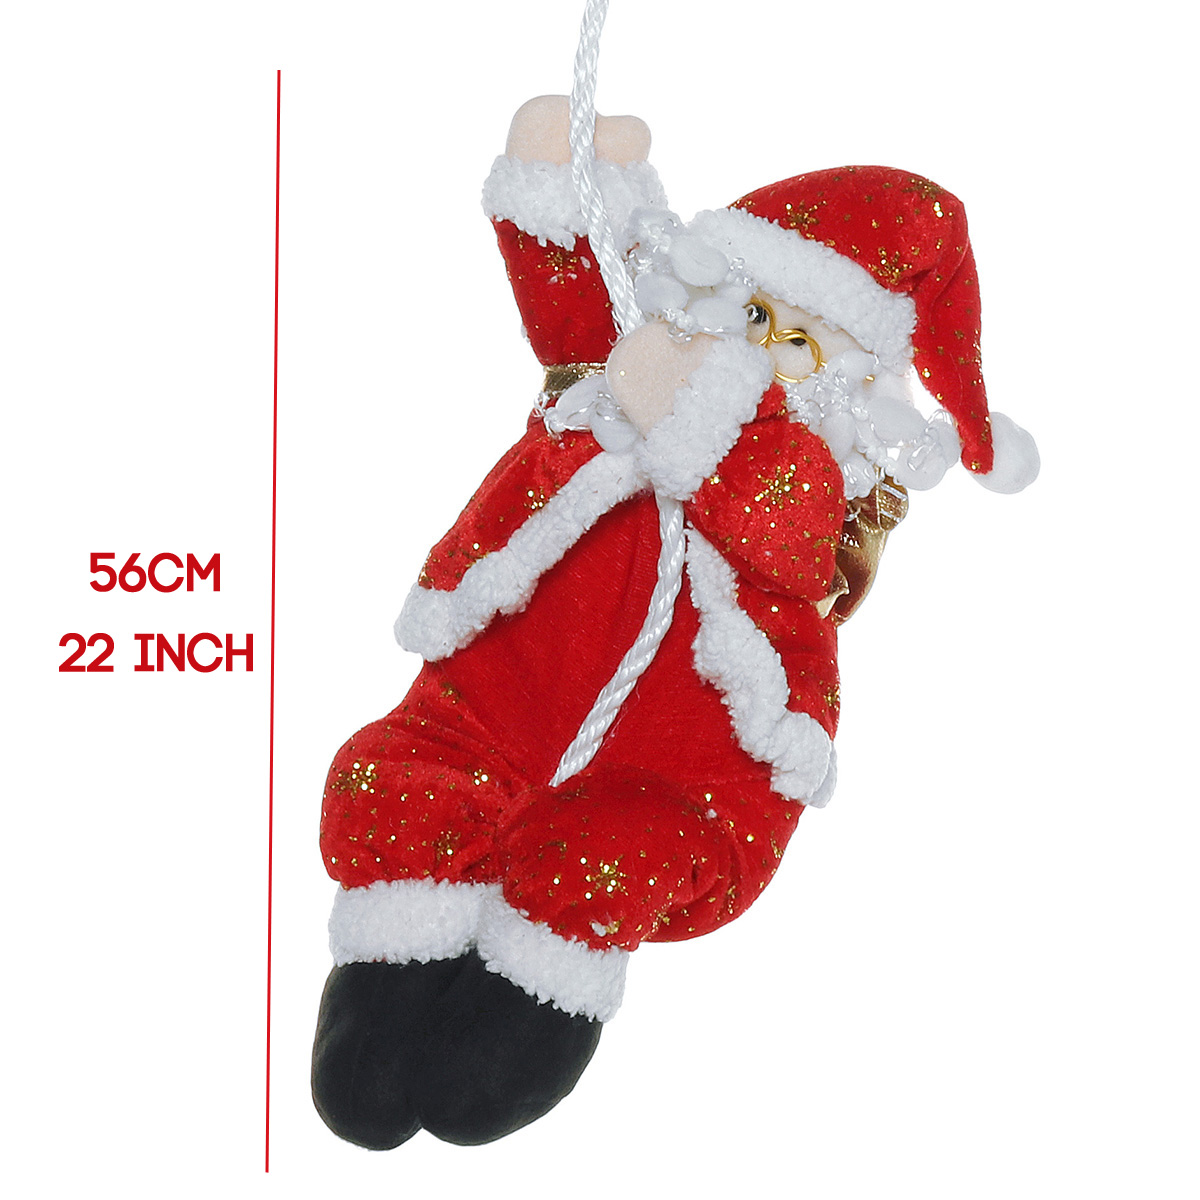 Santa-Climbing-On-Rope-Indoor-Outdoor-Christmas-Tree-Garden-Decorations-1590884-9